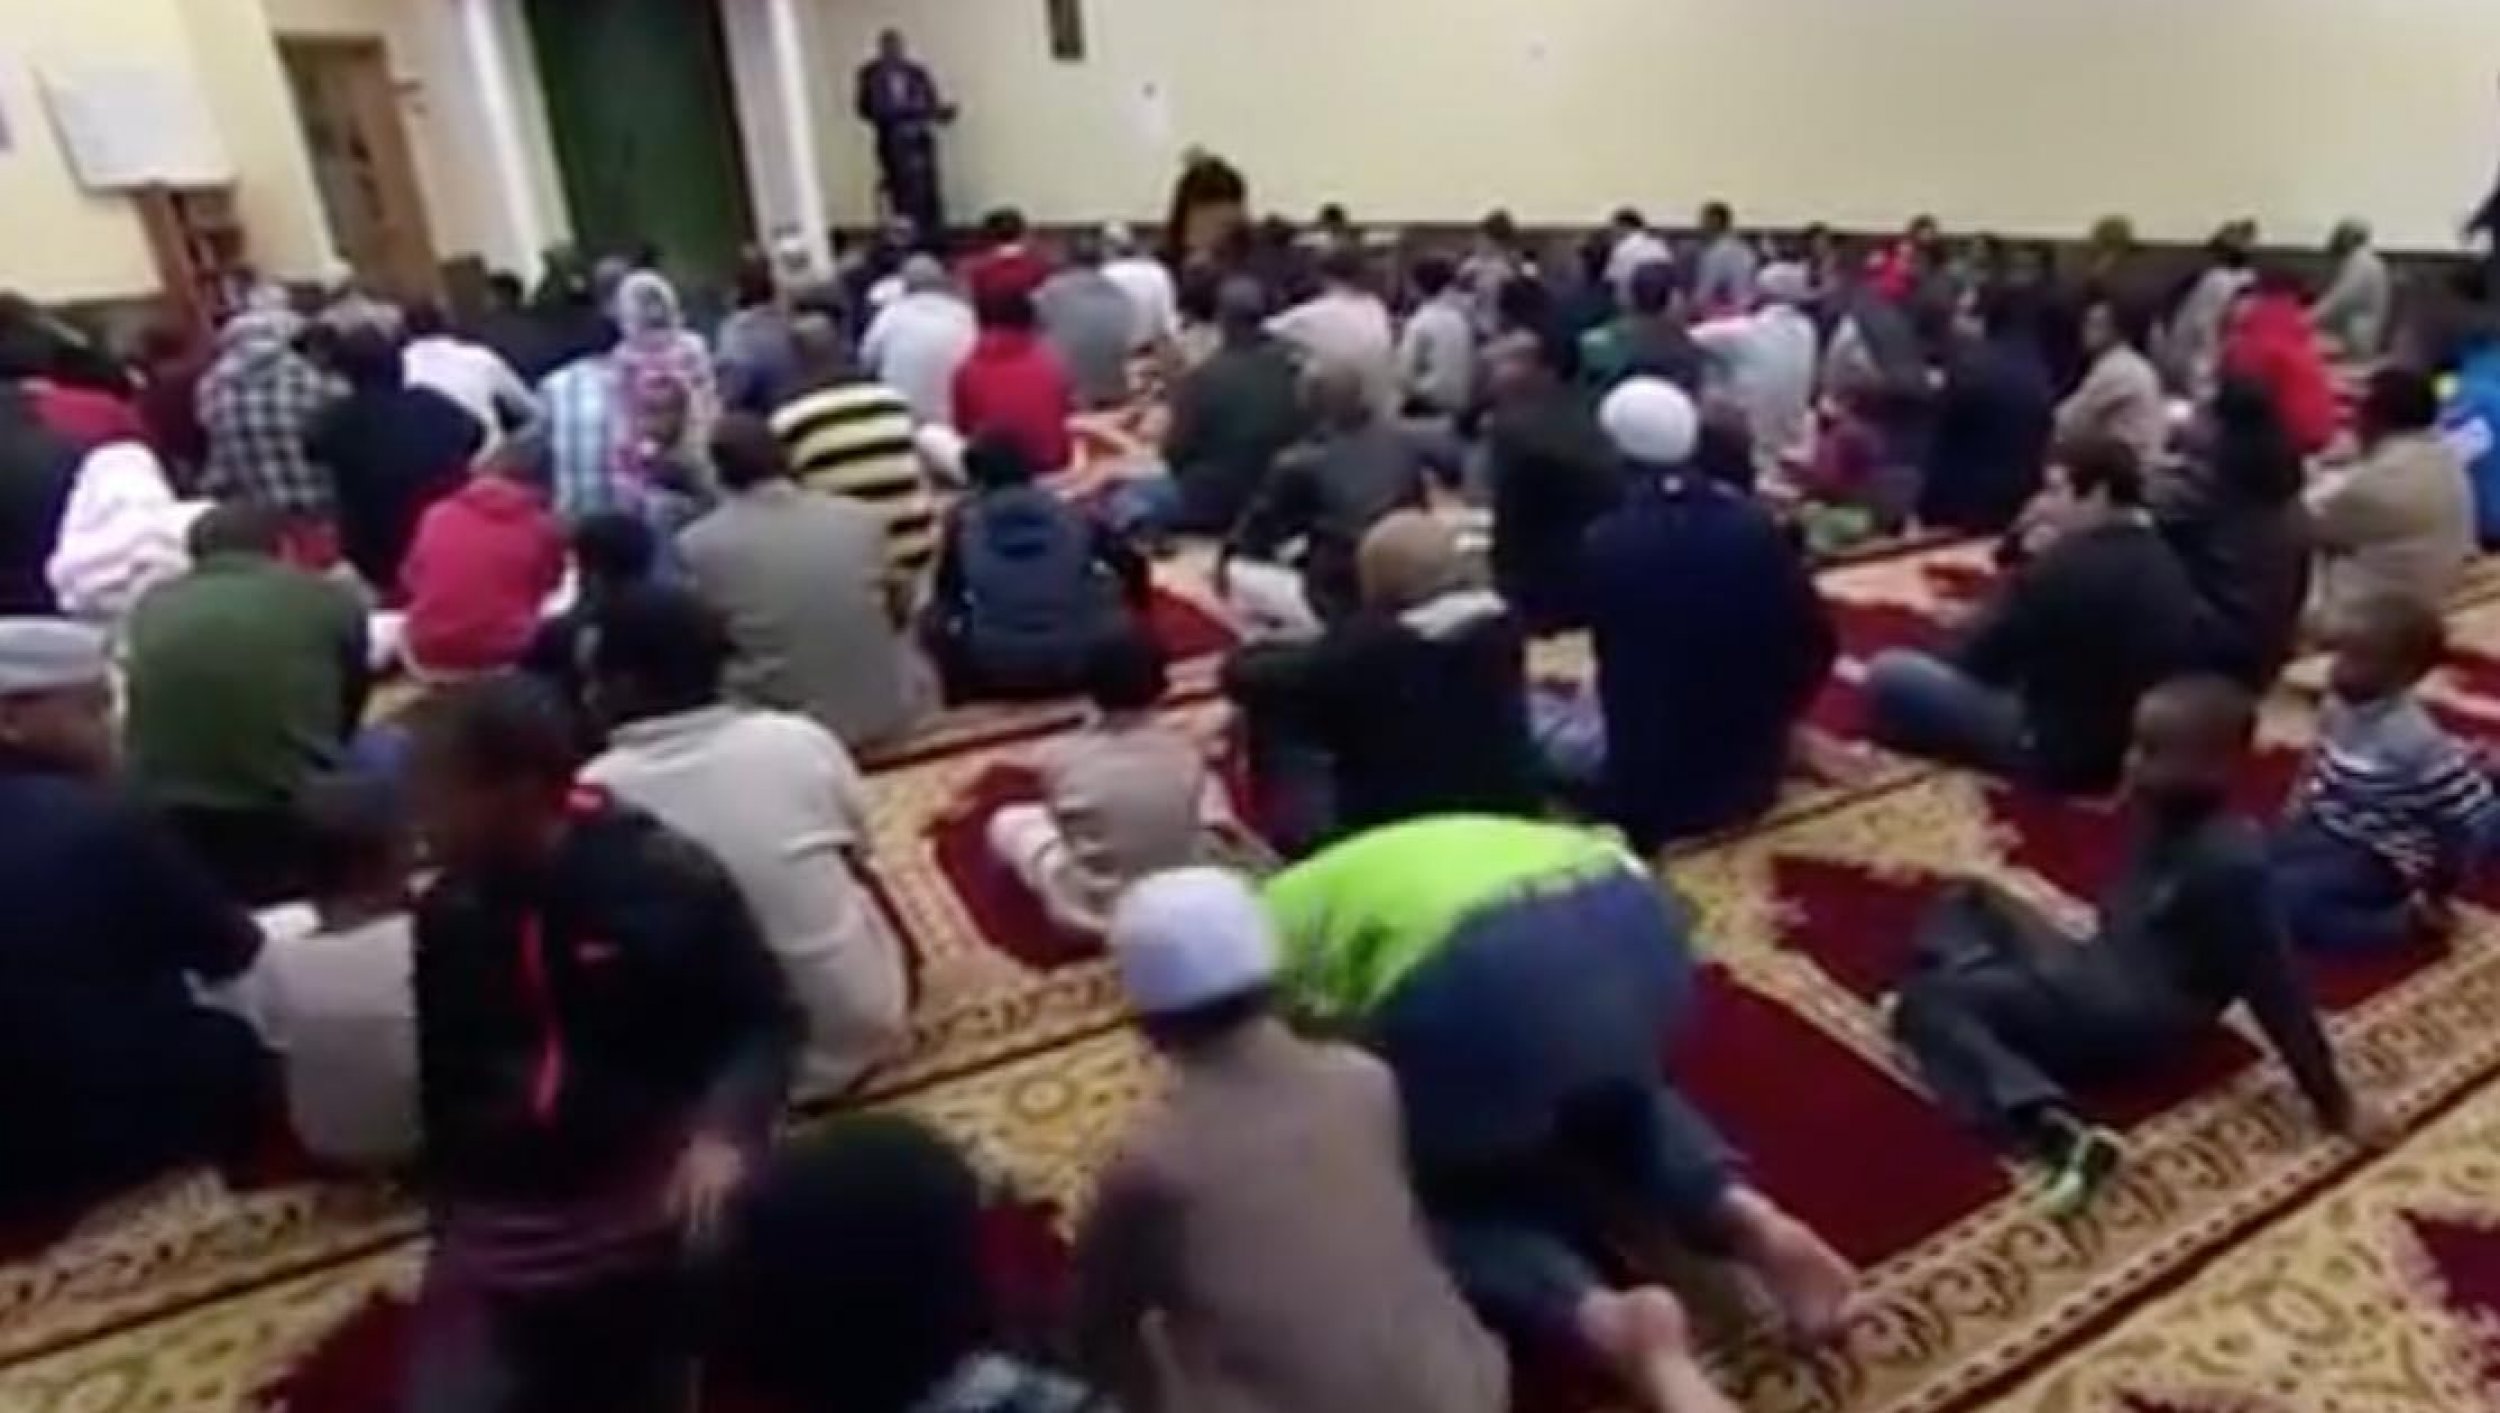 Muslim Americans Worried About Anti-Islam Backlash